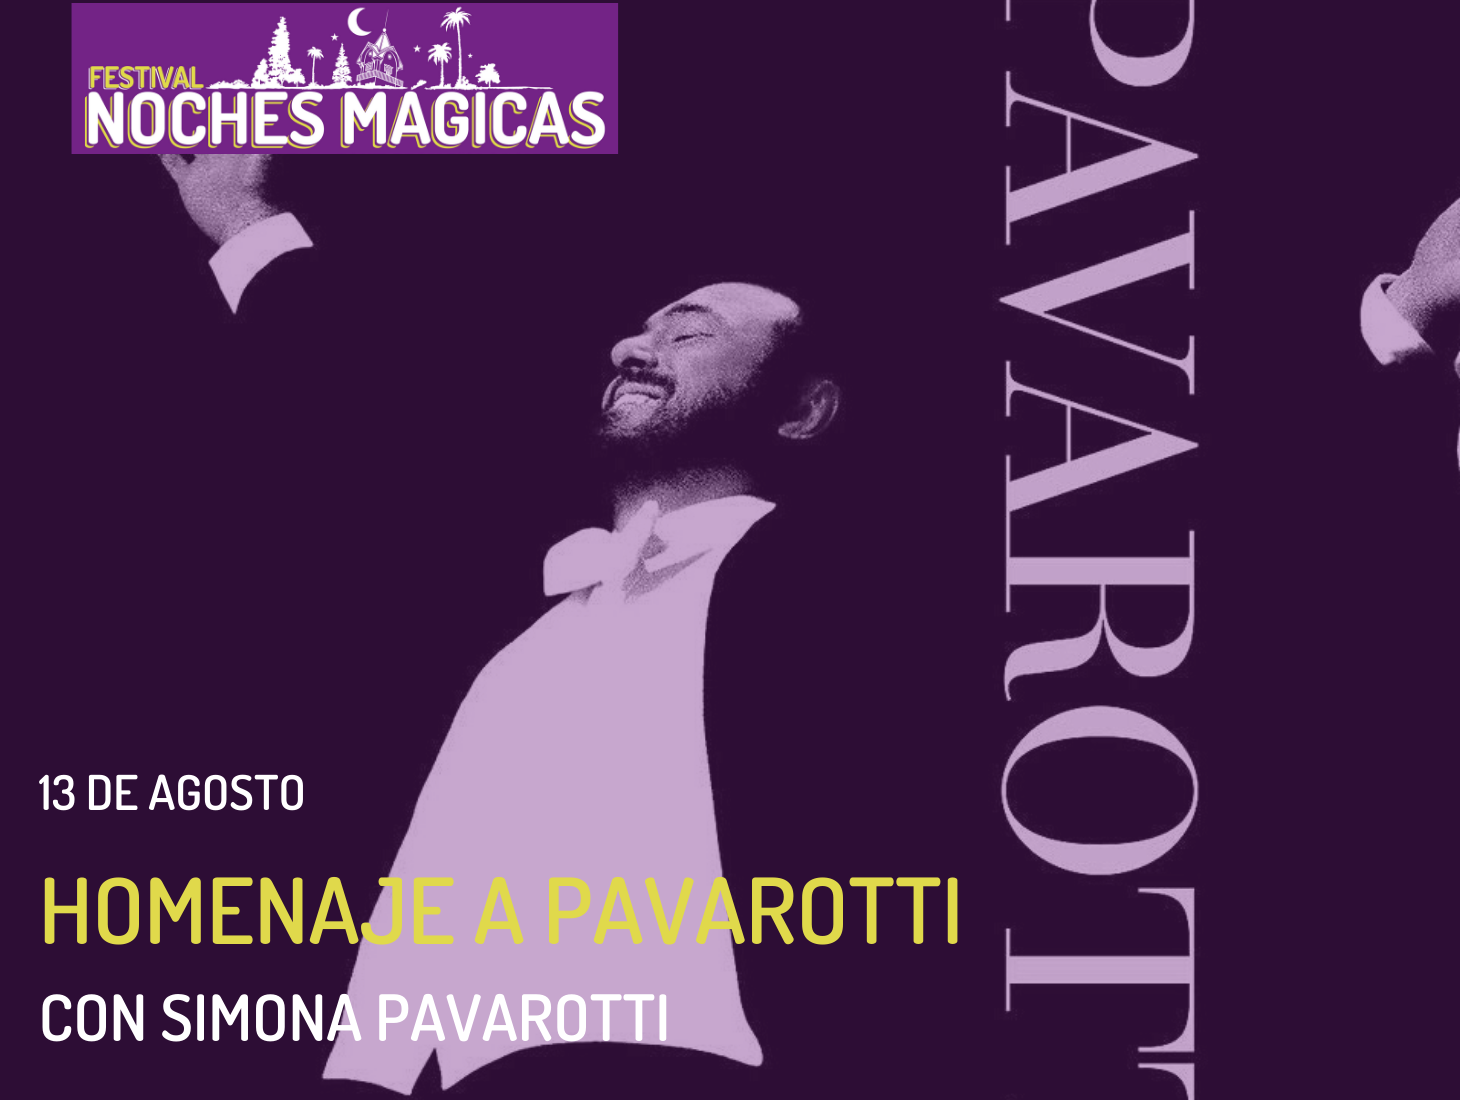 noches-magicas-homenaje-a-pavarotti-con-simona-pavarotti-5f1b047bbabc5.png